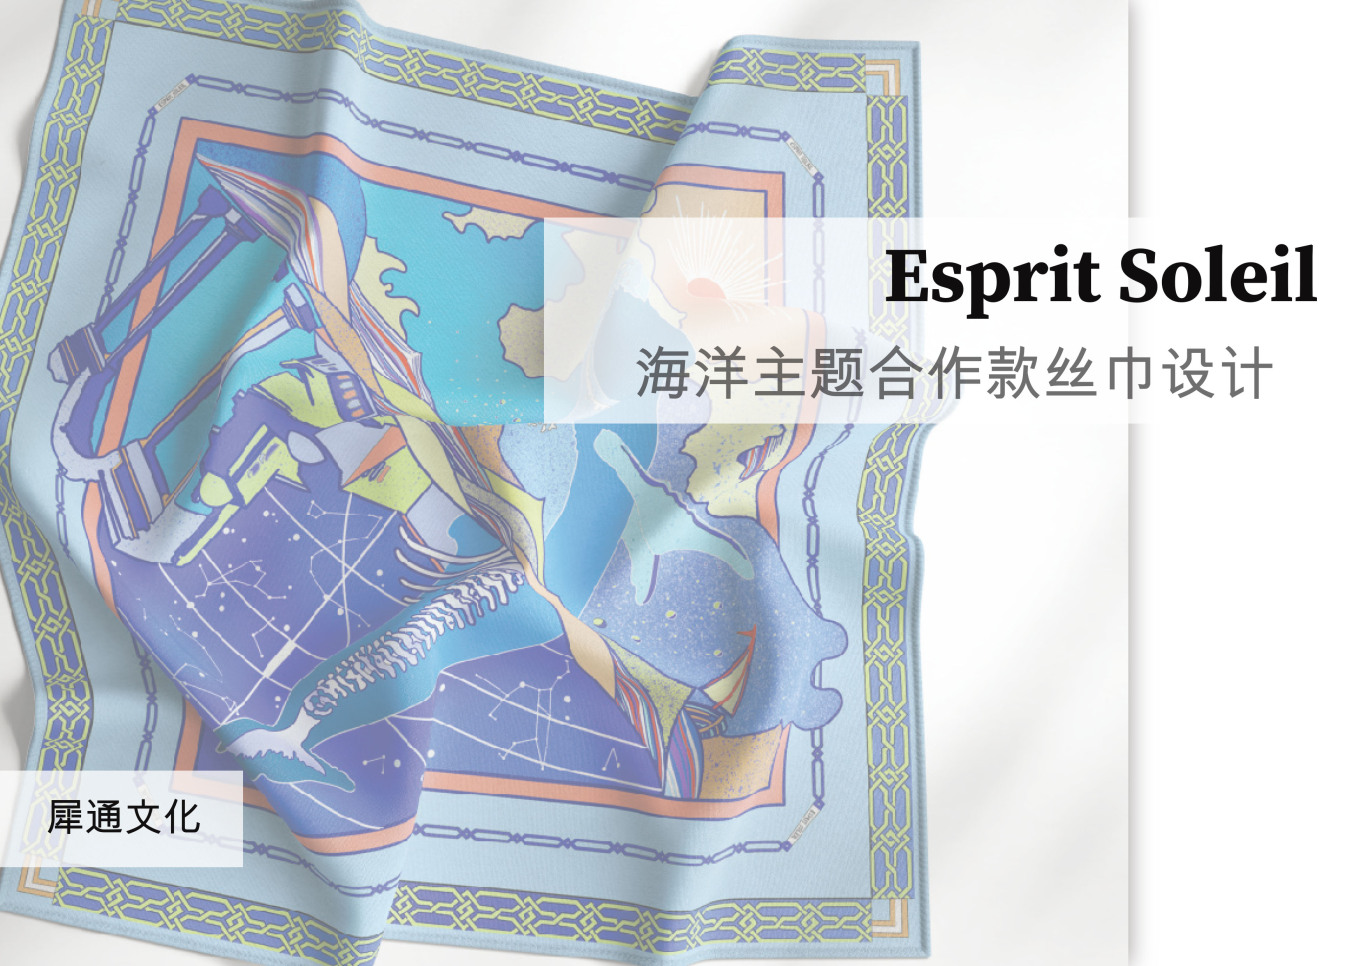 Esprit Soleil海洋主题合作款丝巾设计图0